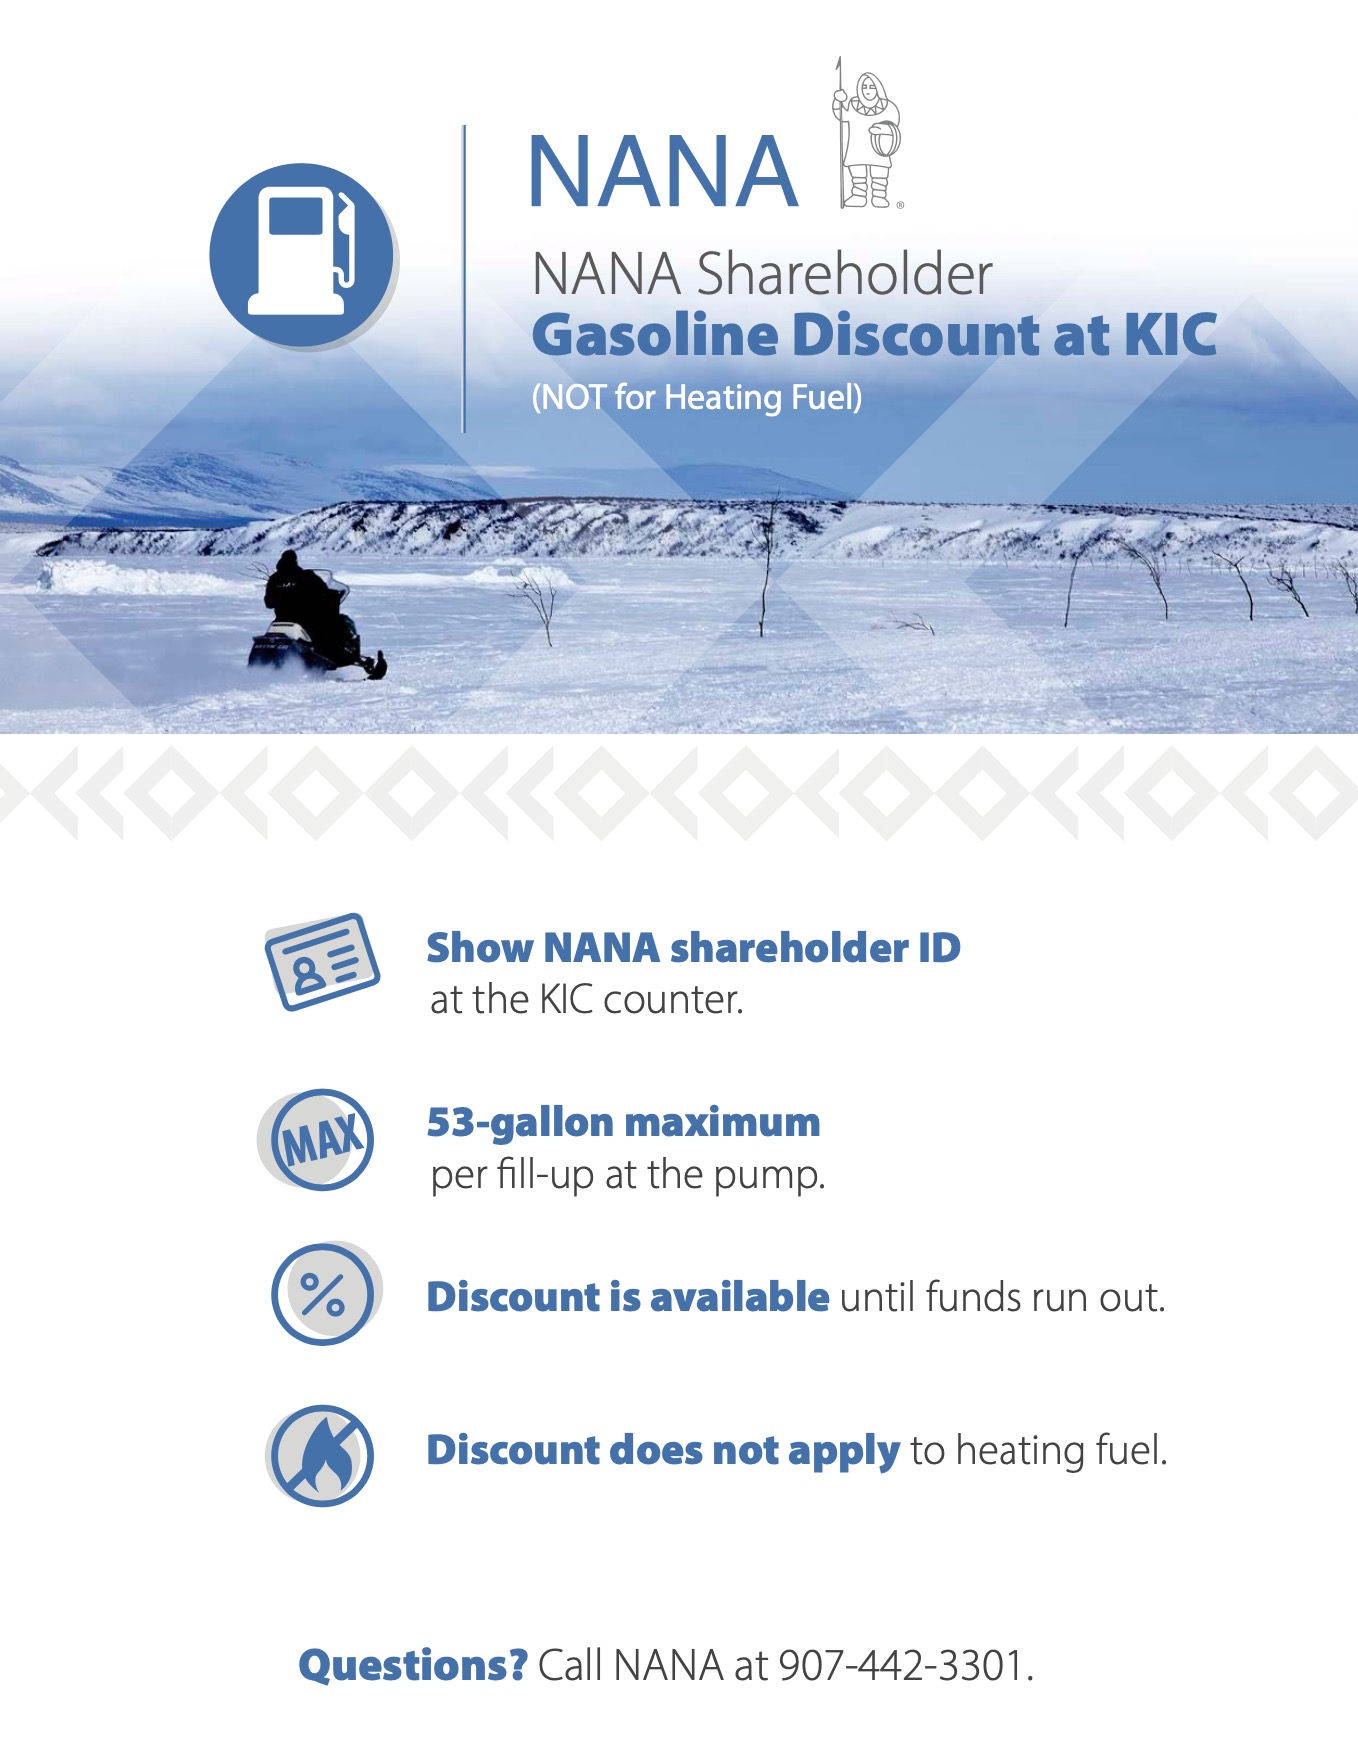 NANA Shareholder Gasoline Discount at KIC